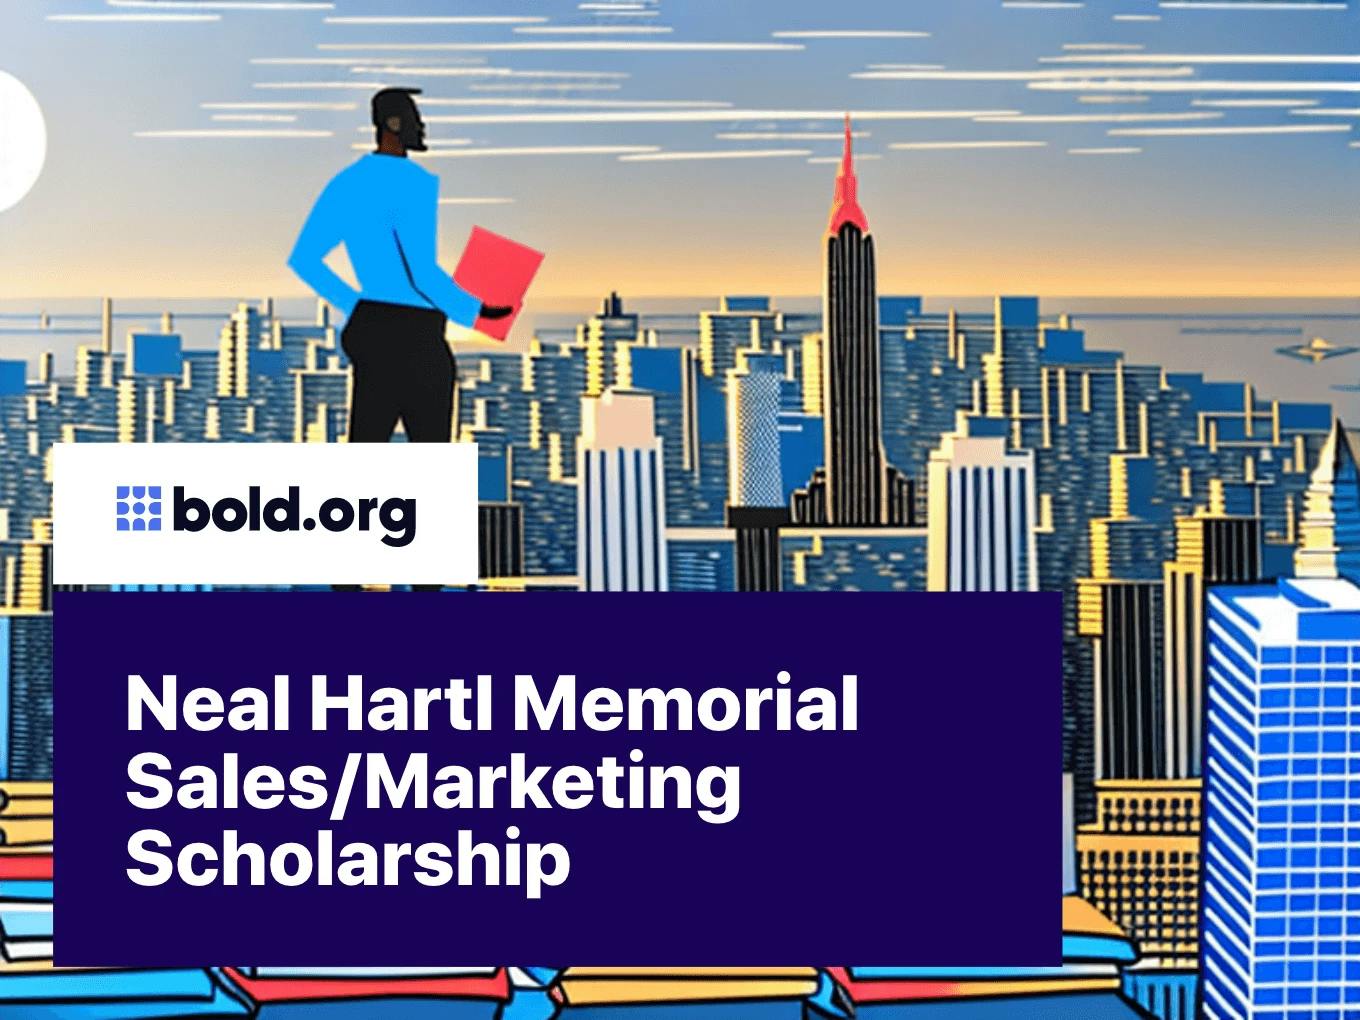 Neal Hartl Memorial Sales/Marketing Scholarship